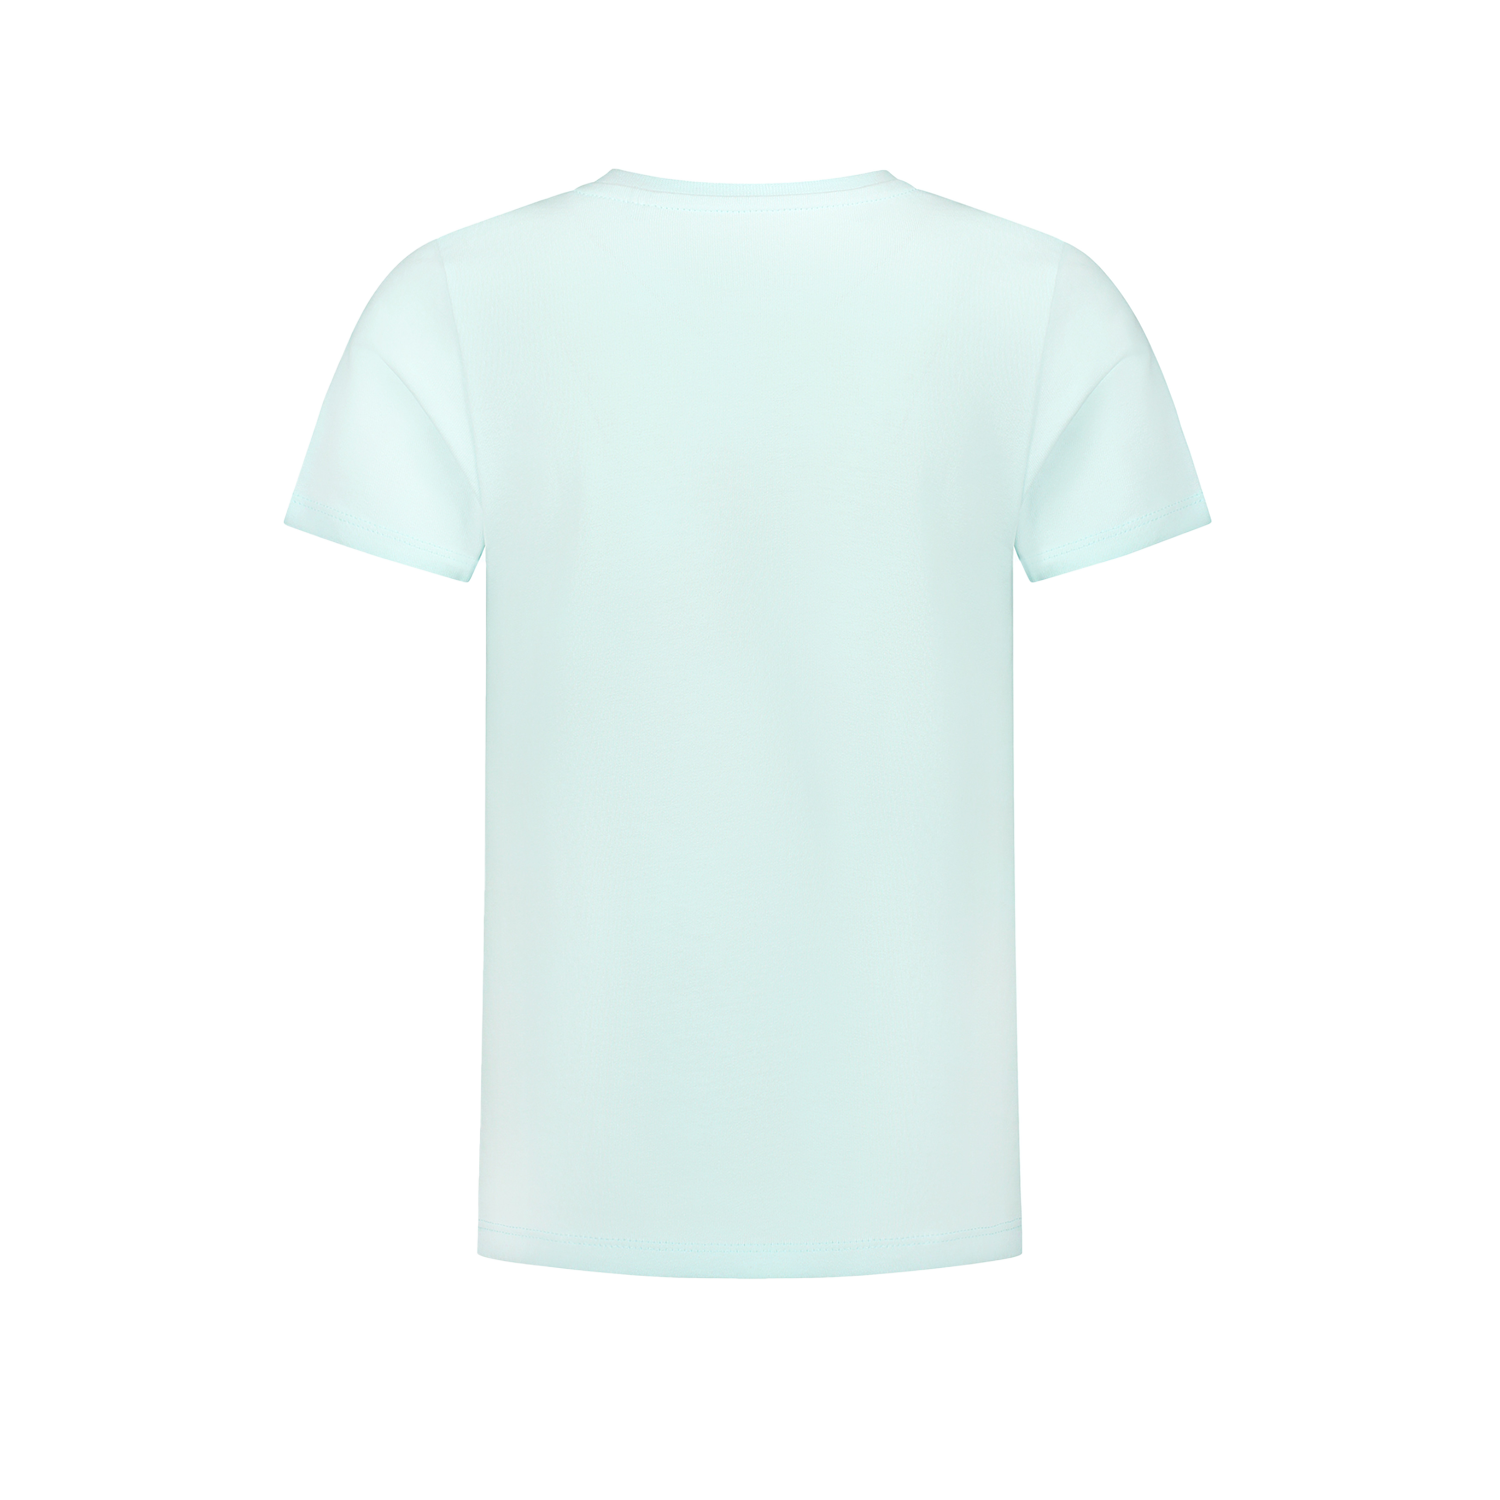 Beukers Kinder-T-Shirt – Blaubeere